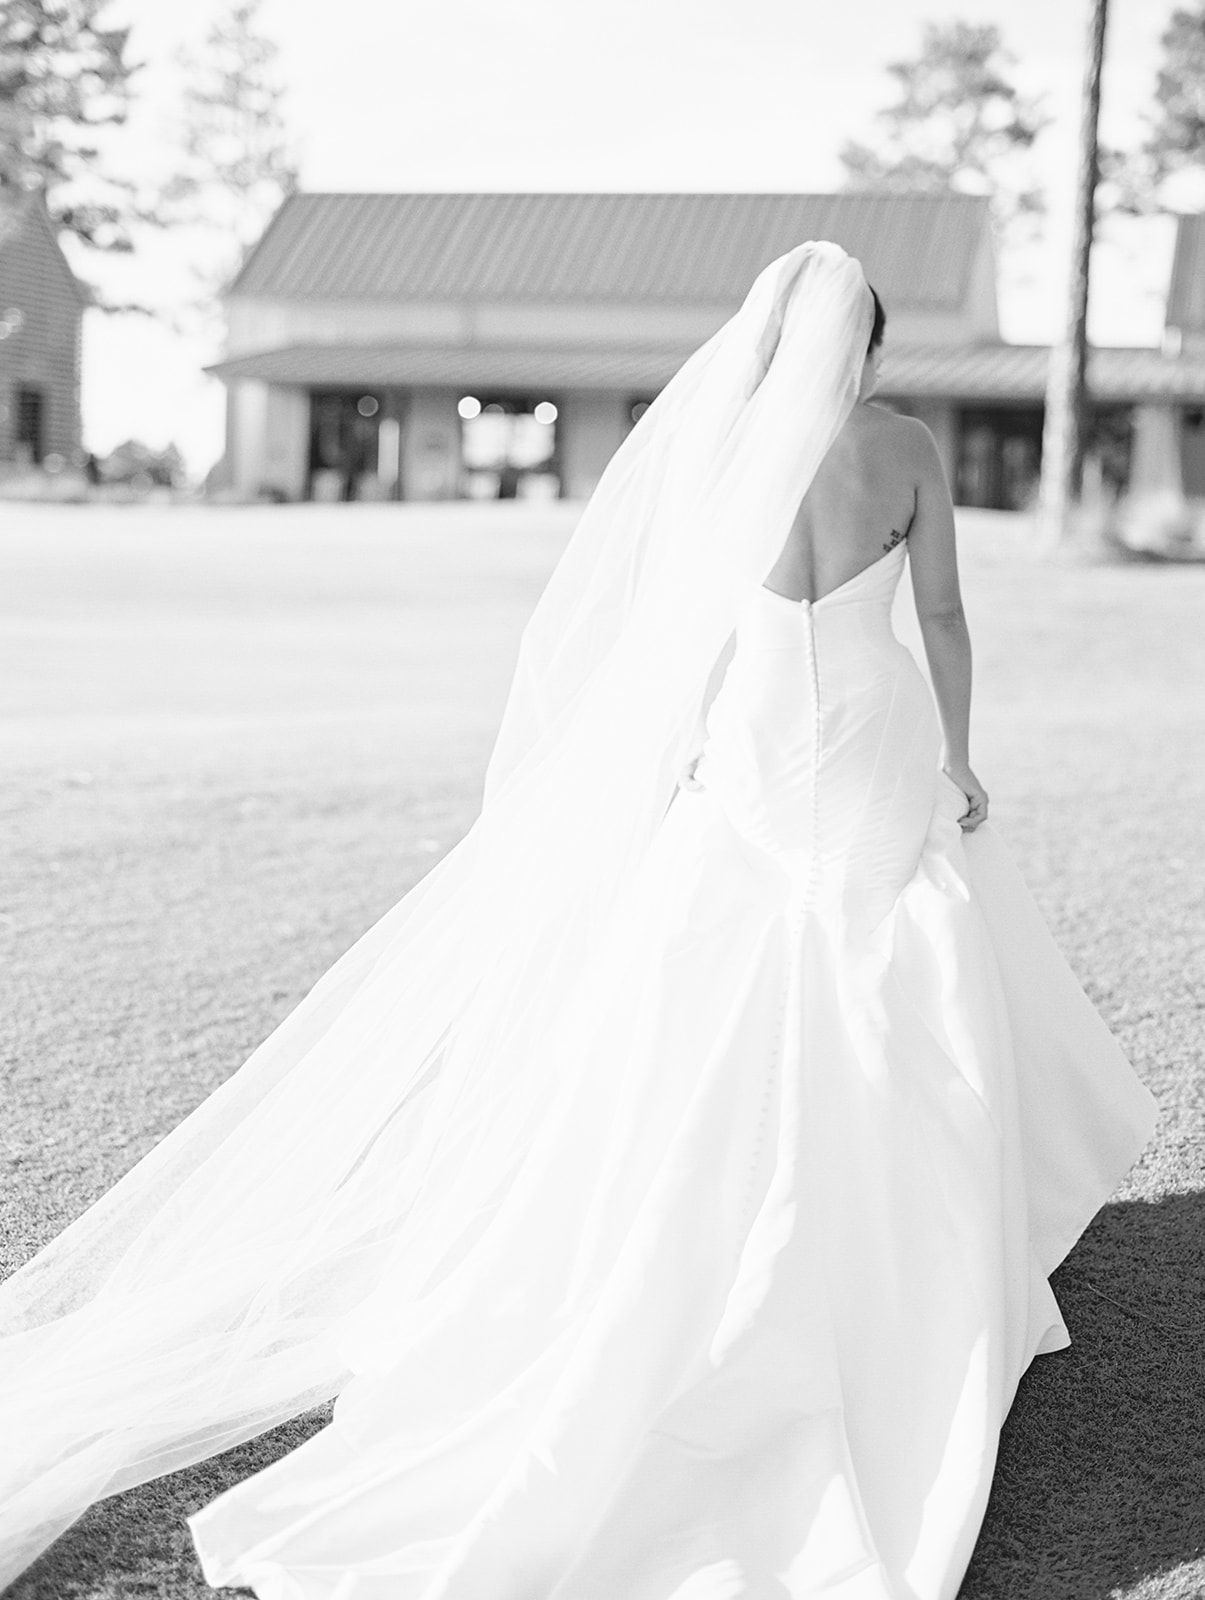 Lanto Griffin married maya brown at Dormie Golf Club, stunning bridal portrait